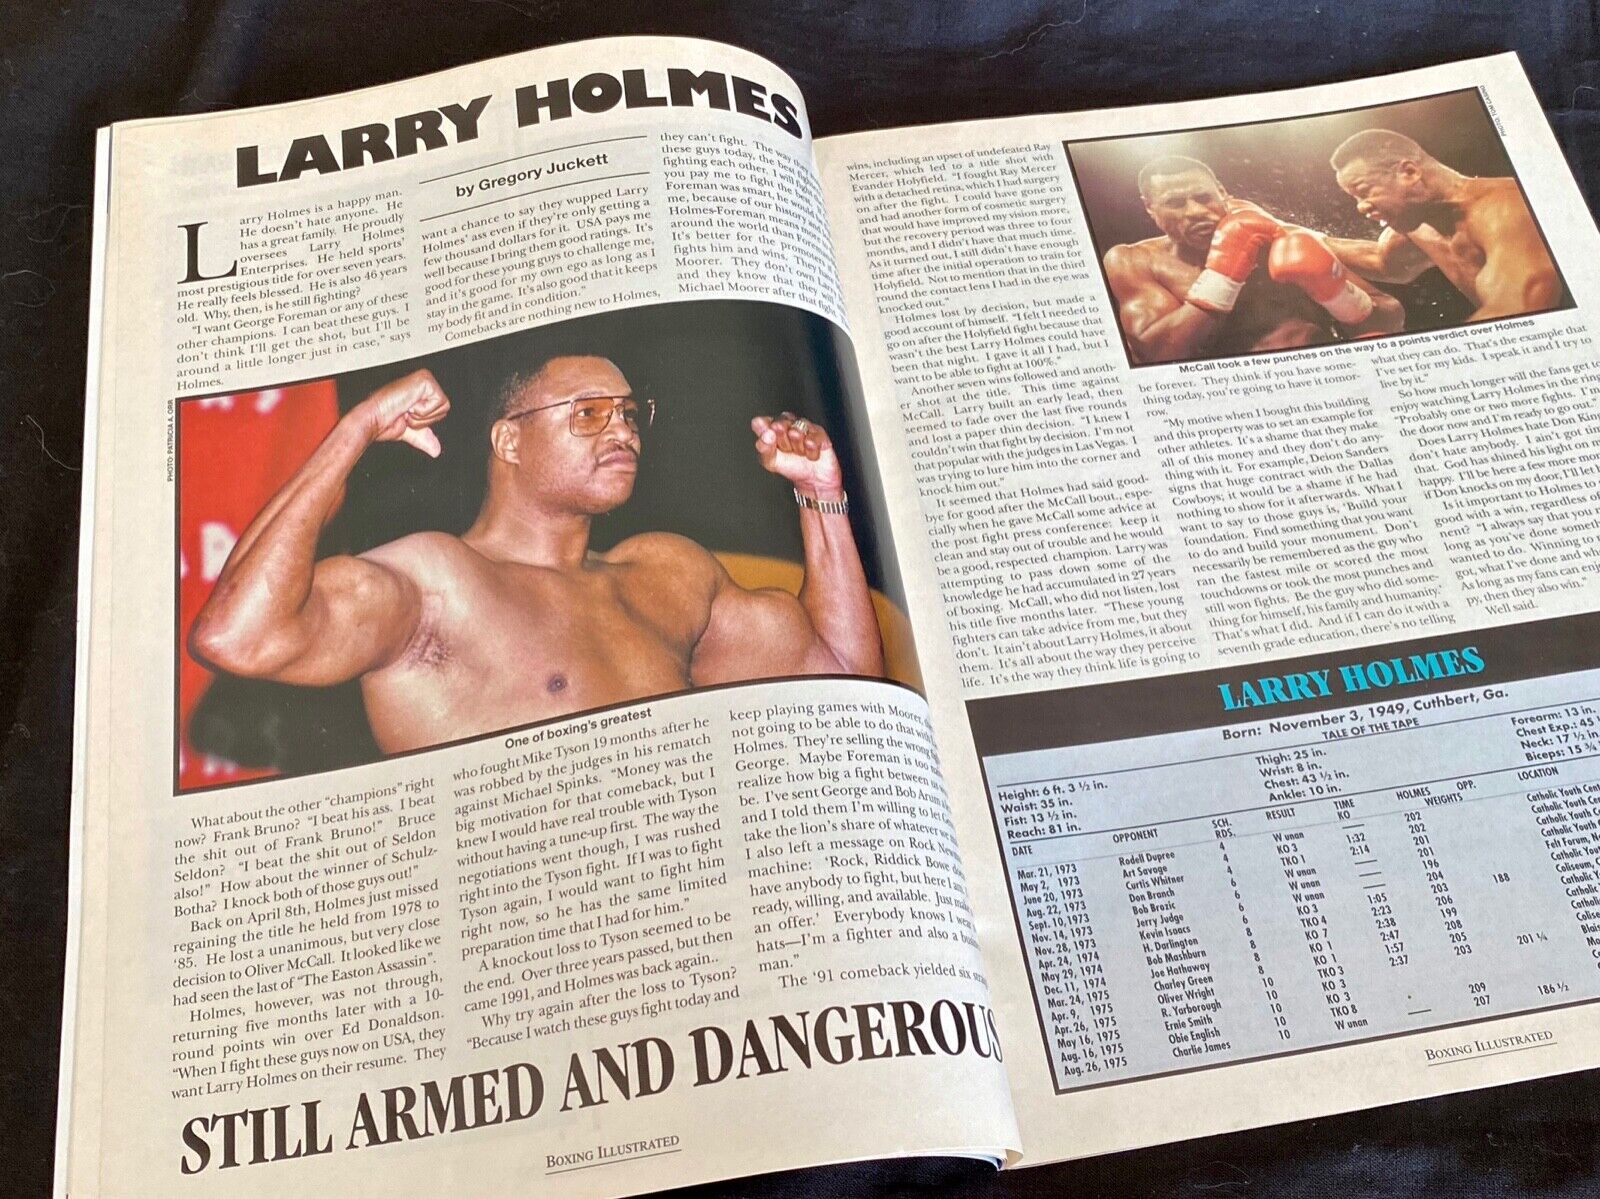 OSCAR DELA HOYA "FIGHER OF THE YEAR"- BOXING DIGEST (2/96) + BUDWEISER PROMO Boxing Digest & Budweiser - фотография #9